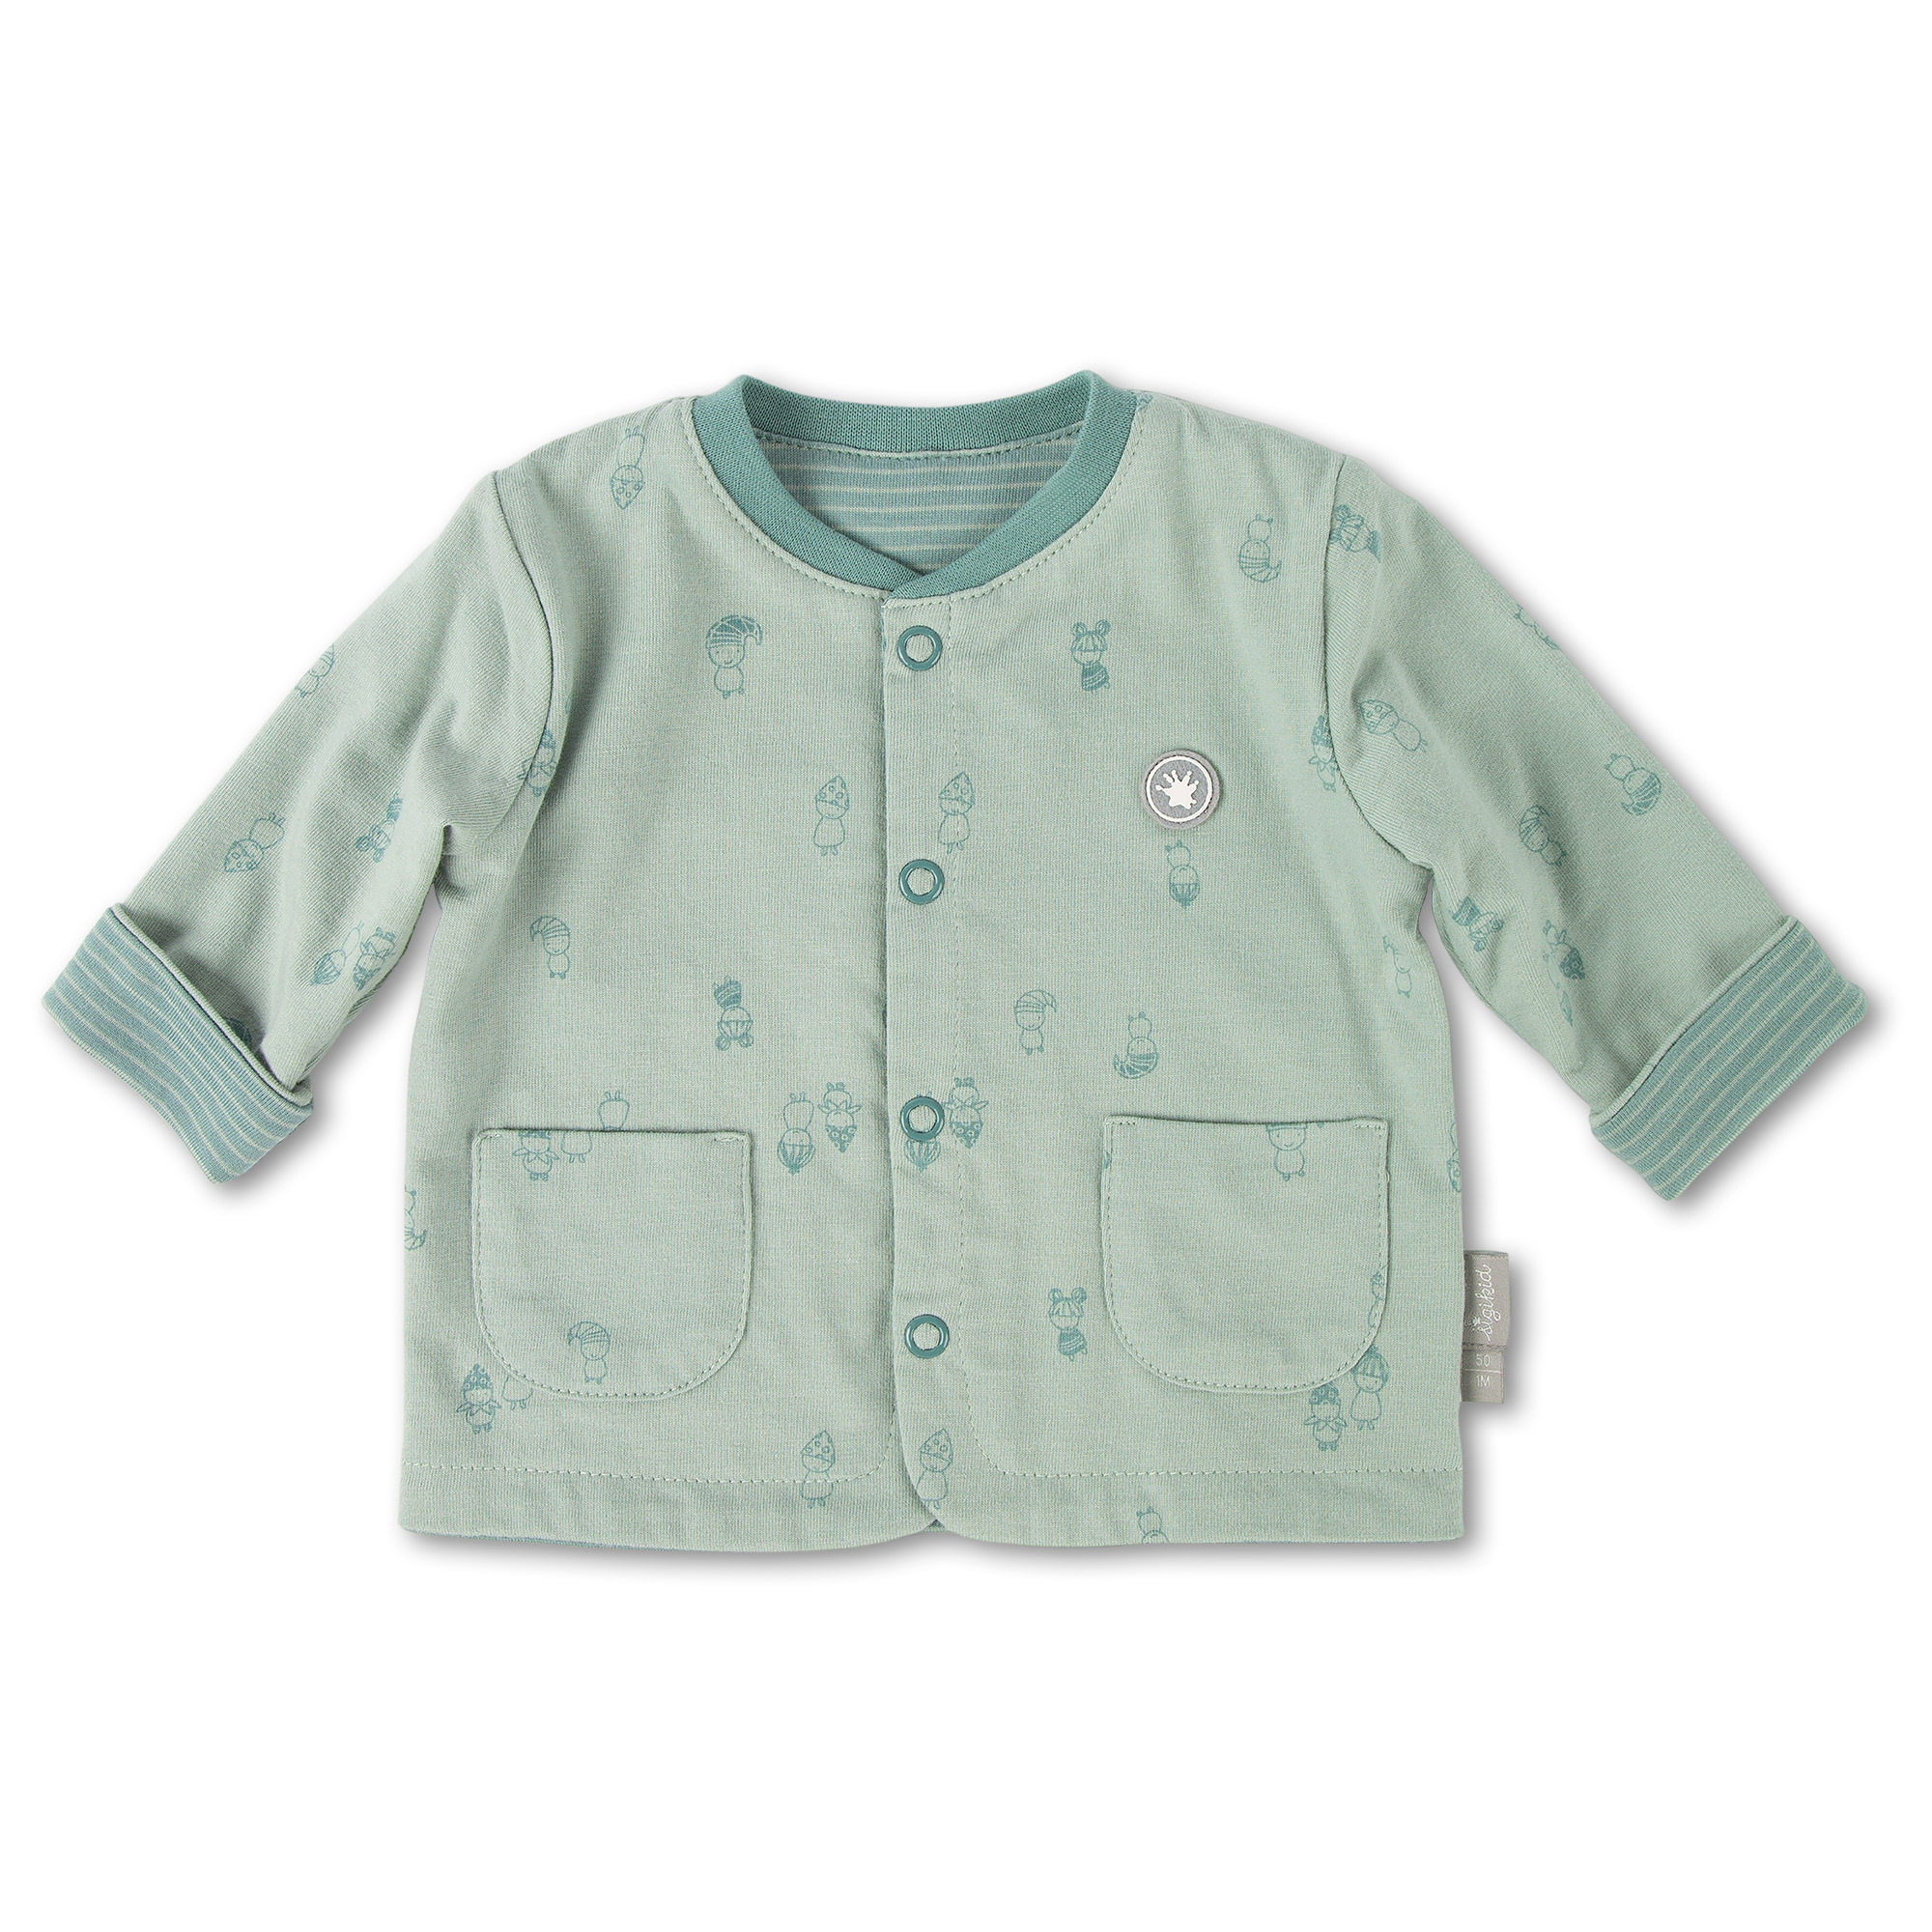 Reversible newborn baby jacket, mint green